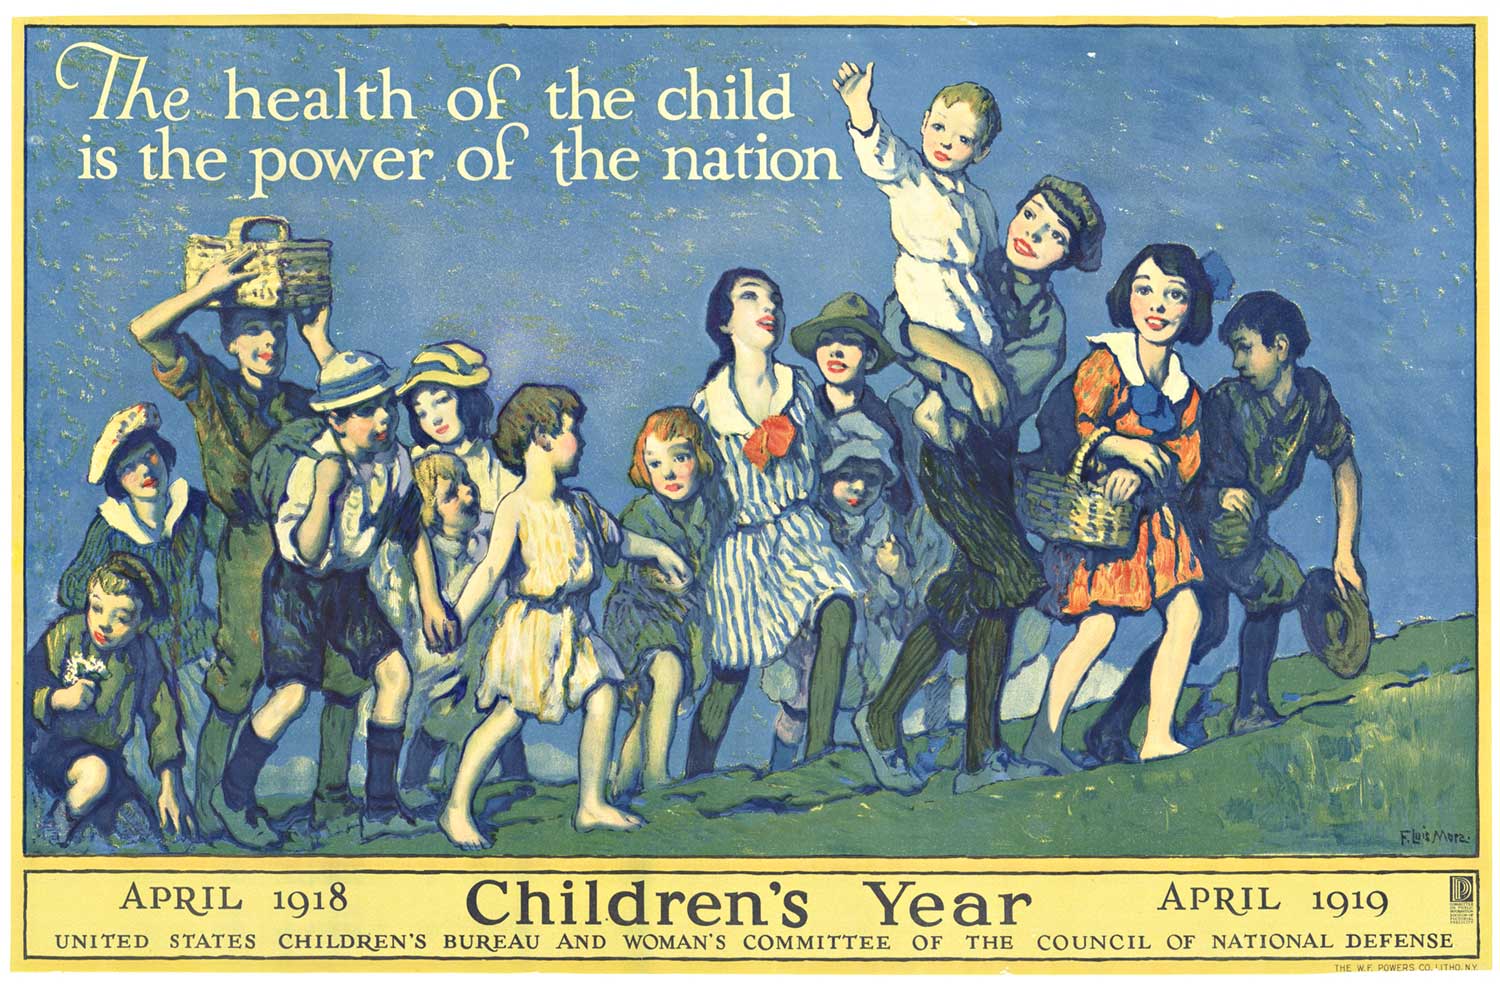 children playing, field, horizontal, original poster, children's health